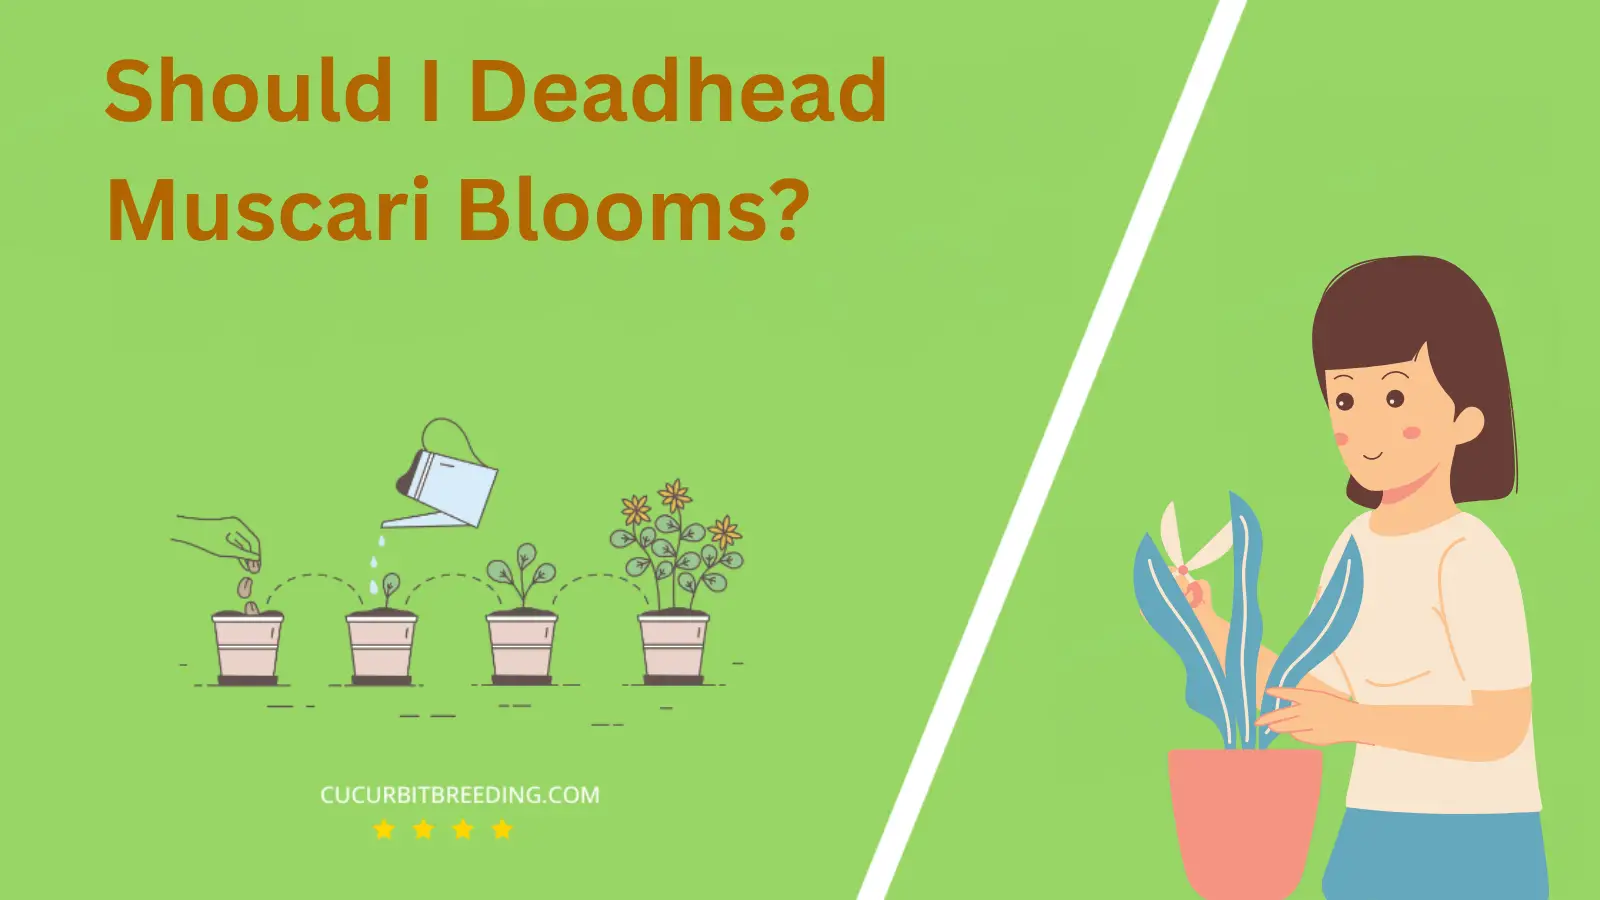 Should I Deadhead Muscari Blooms?